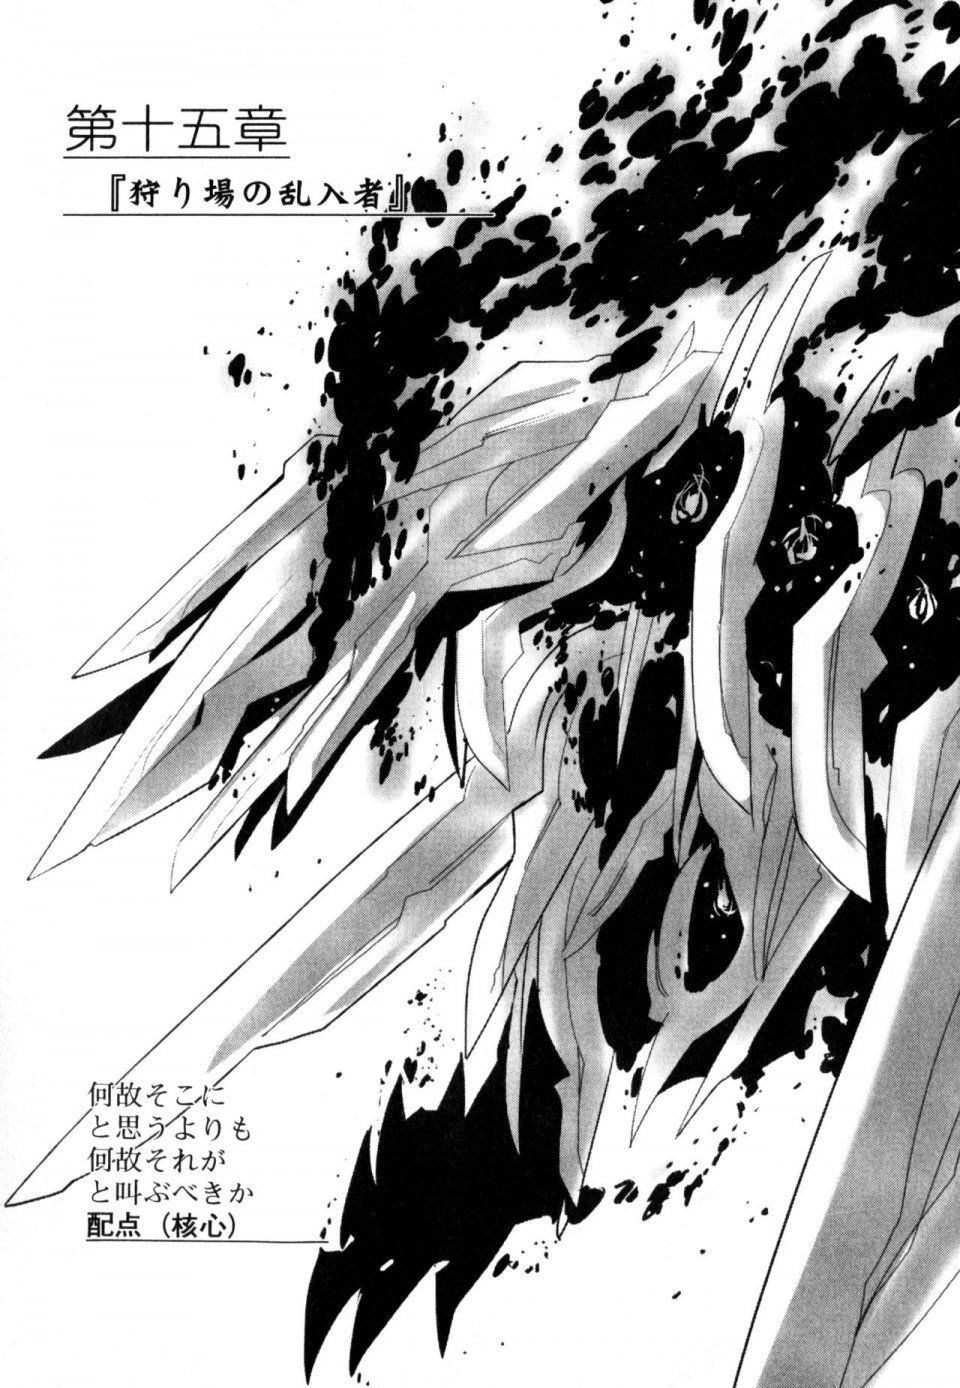 Kyoukai Senjou no Horizon BD Special Mininovel Vol 3(2A) - Photo #187